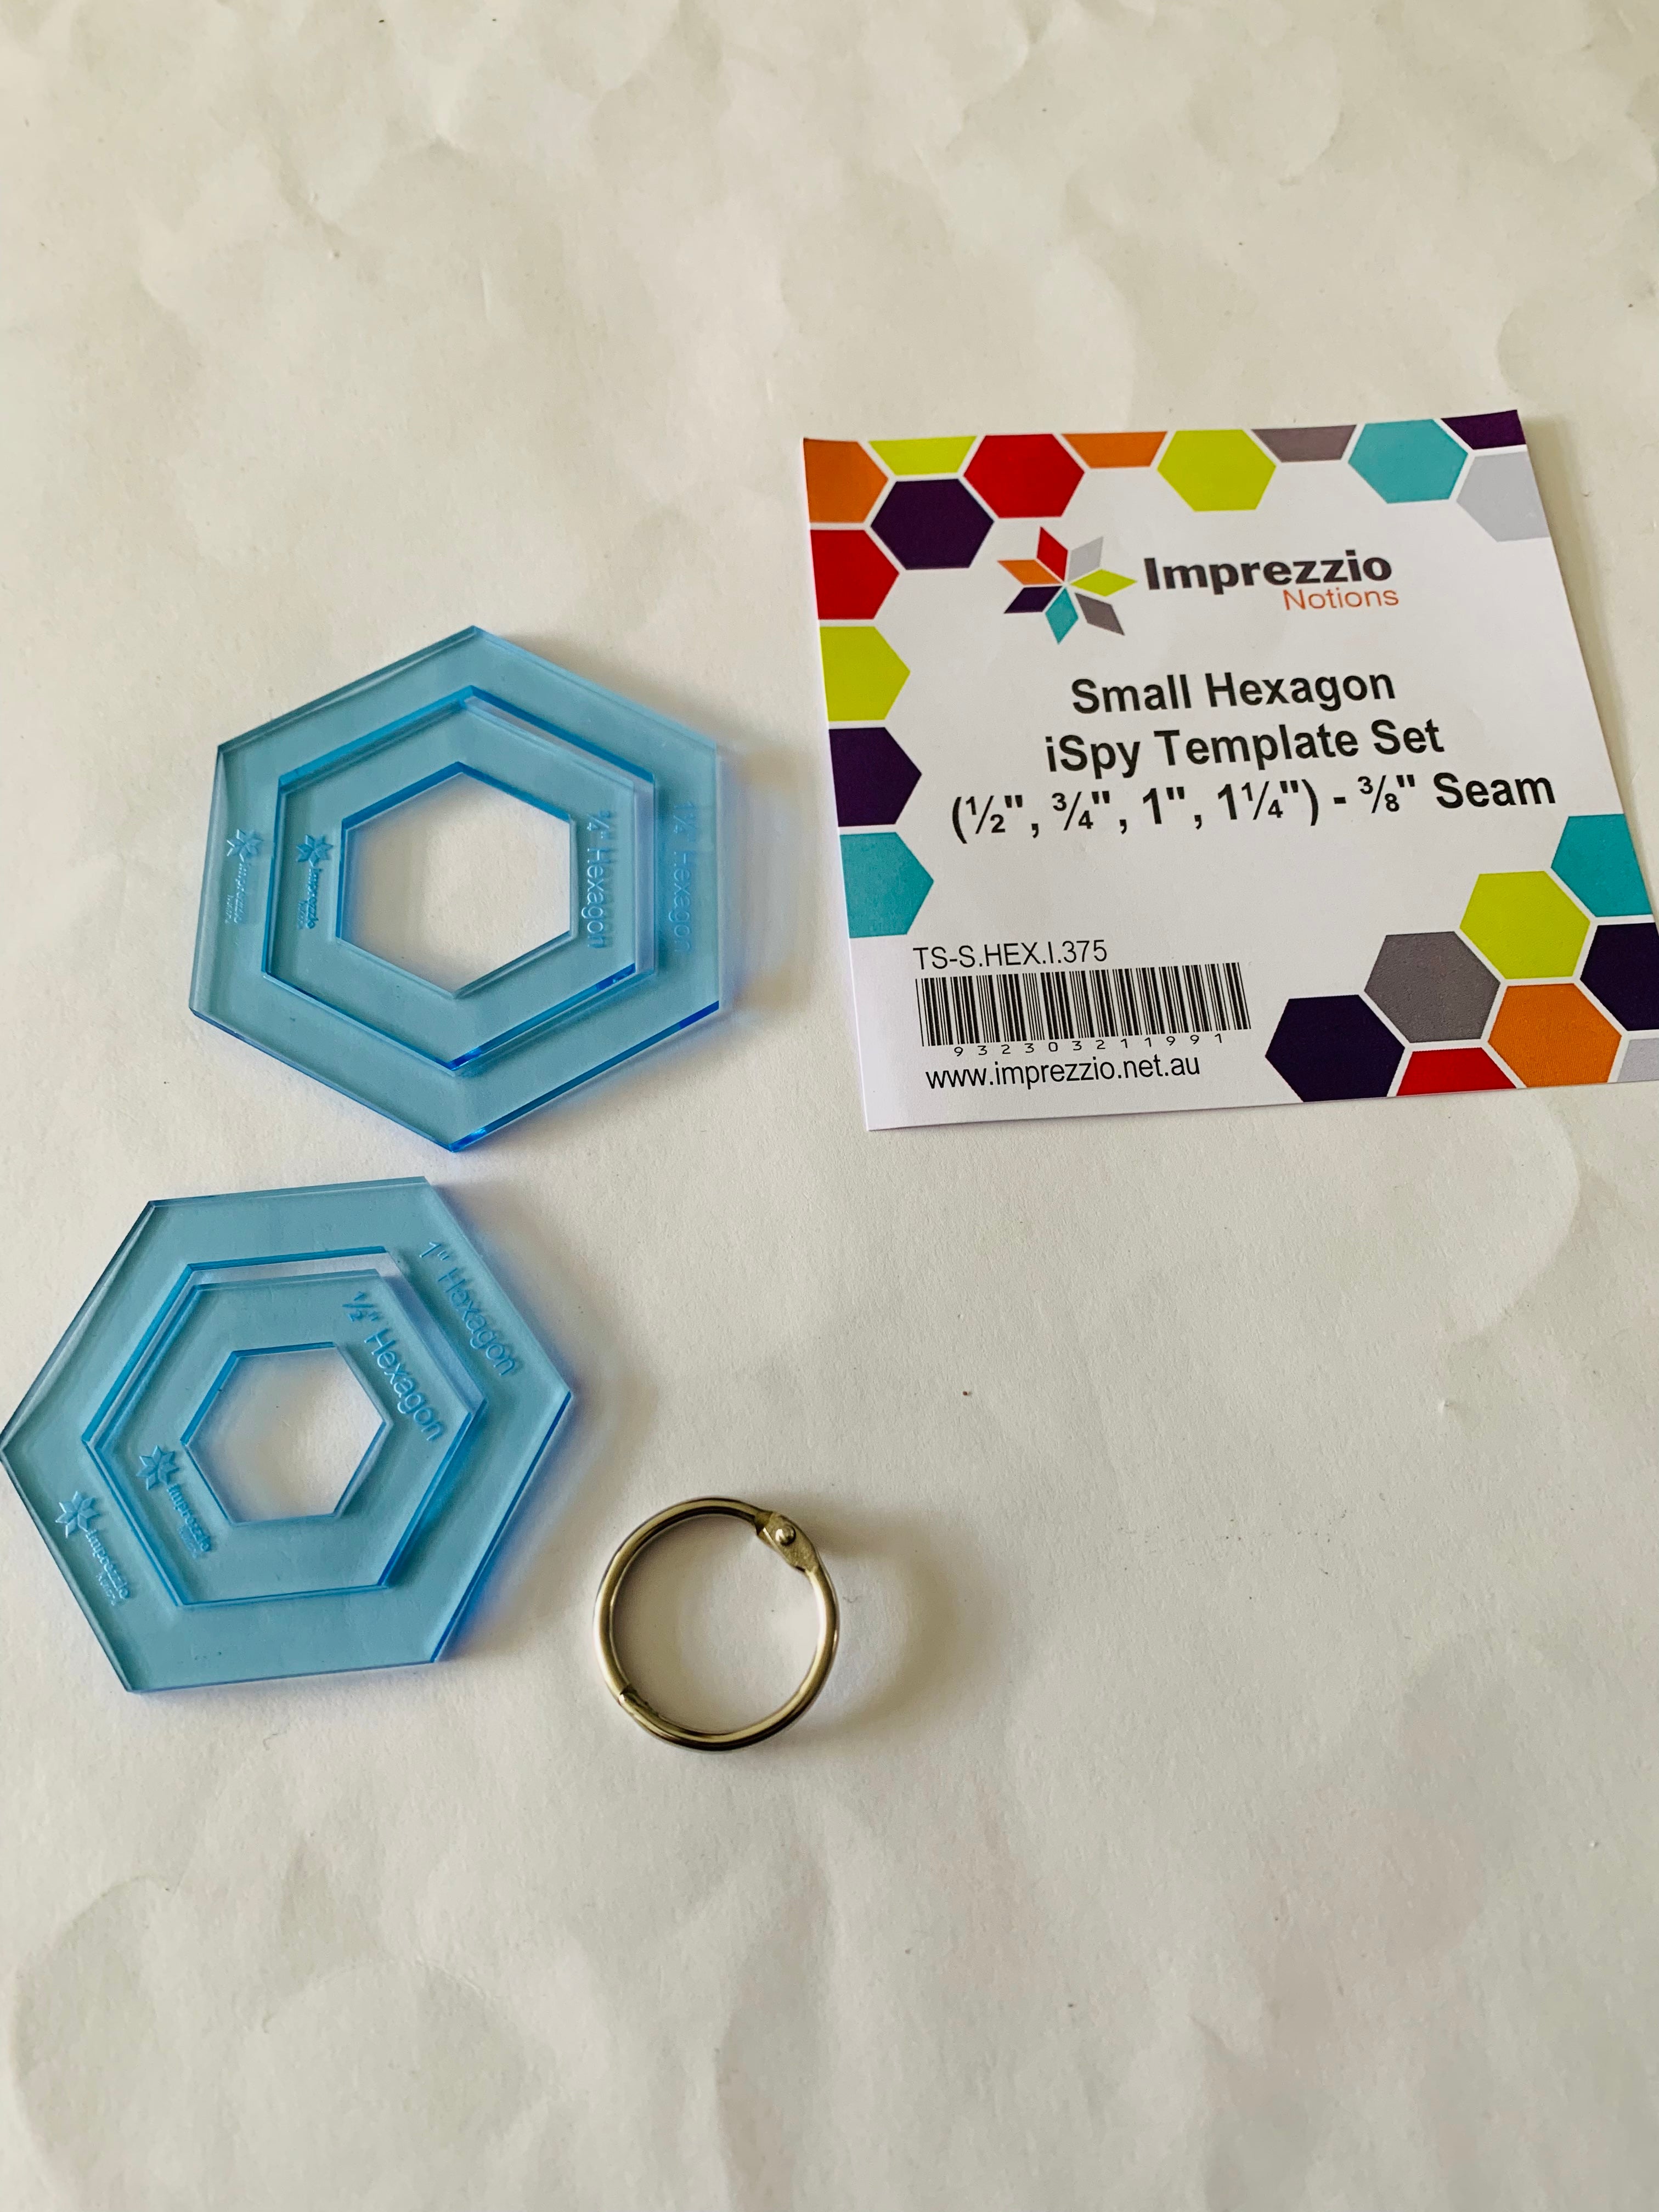 Imprezzio Small Hexagon iSpy Template Set: 1/2”, 3/4”, 1”, 1 1/4”, 3/8” seam